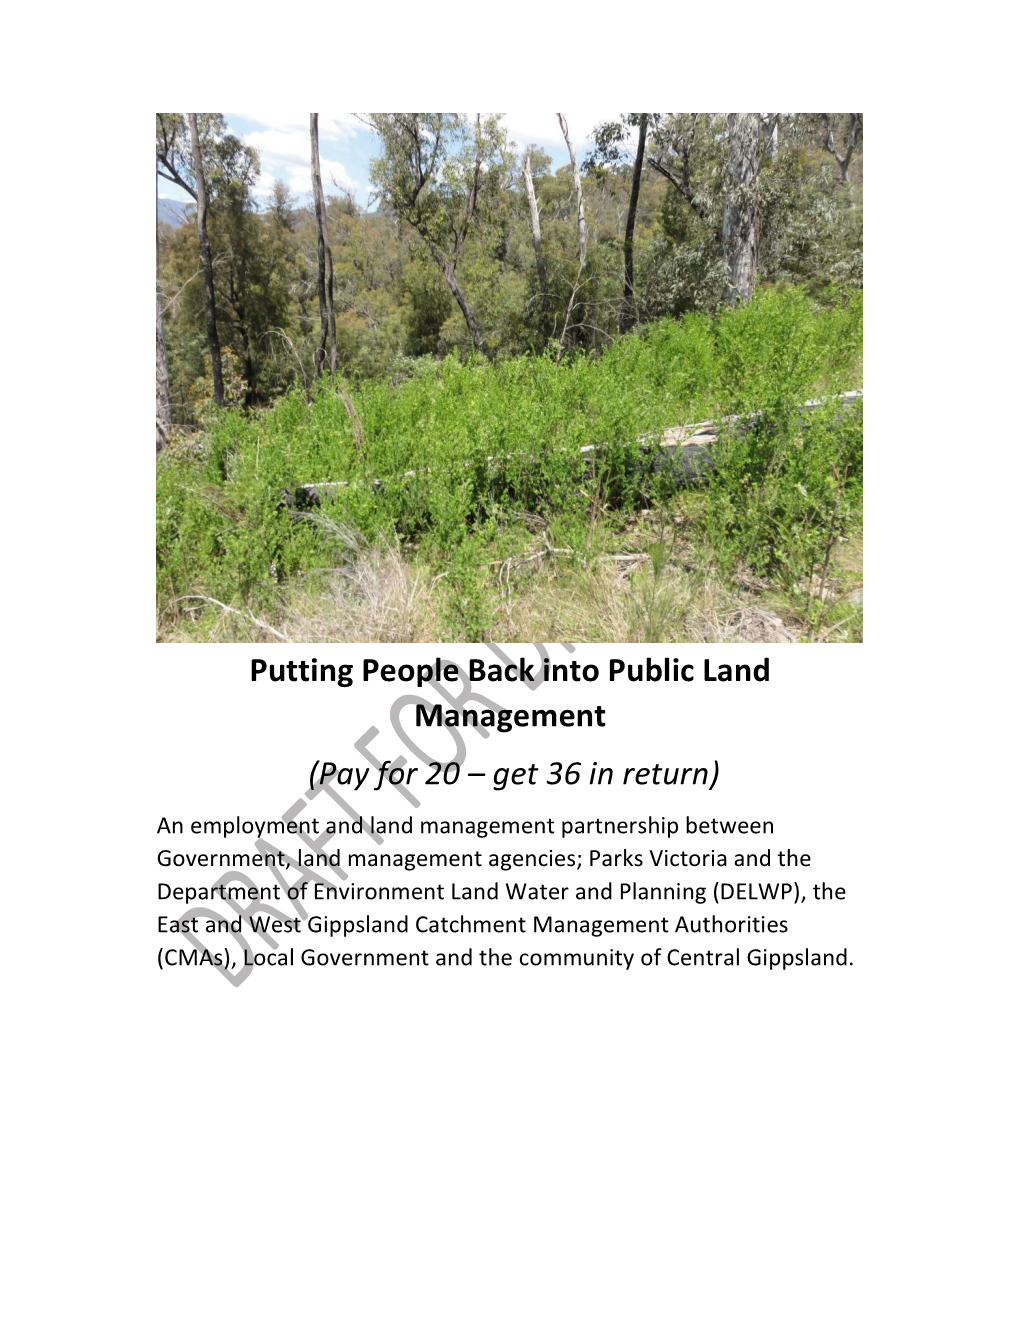 Putting People Back Into Public Land Management